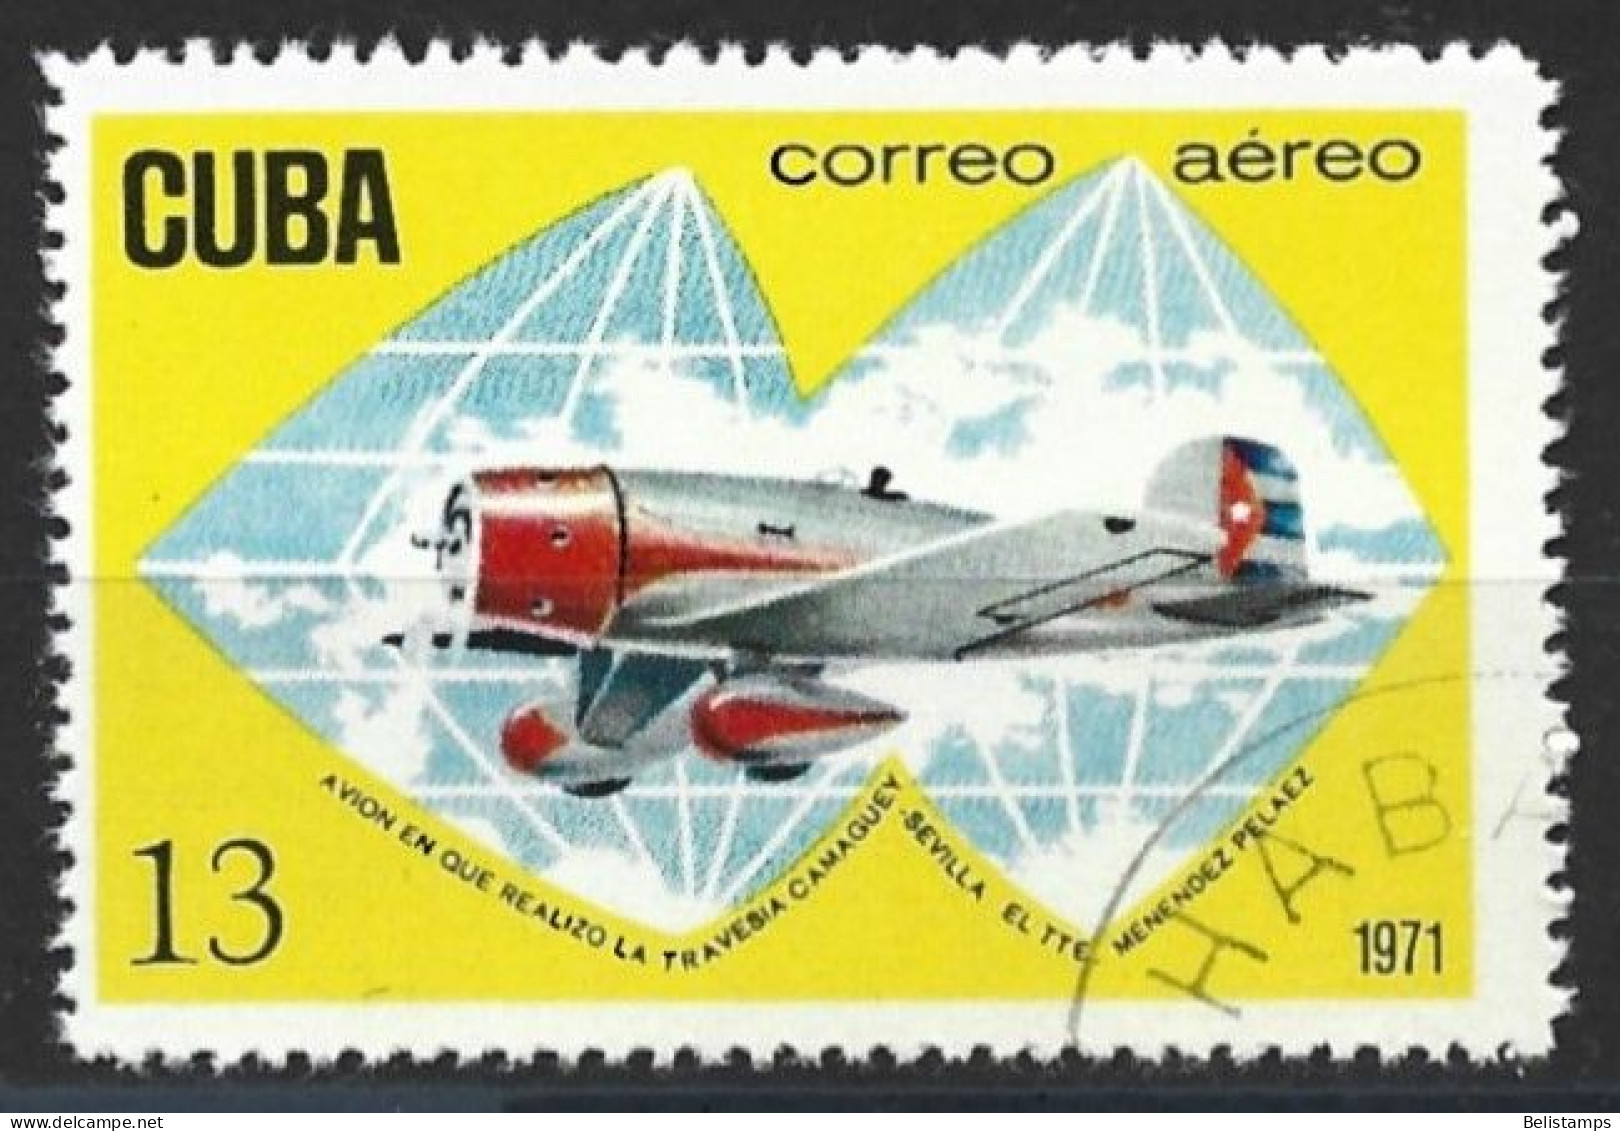 Cuba 1971. Scott #C247 (U) Camaguey-Seville Flight, 35th Anniv, Aircraft - Airmail